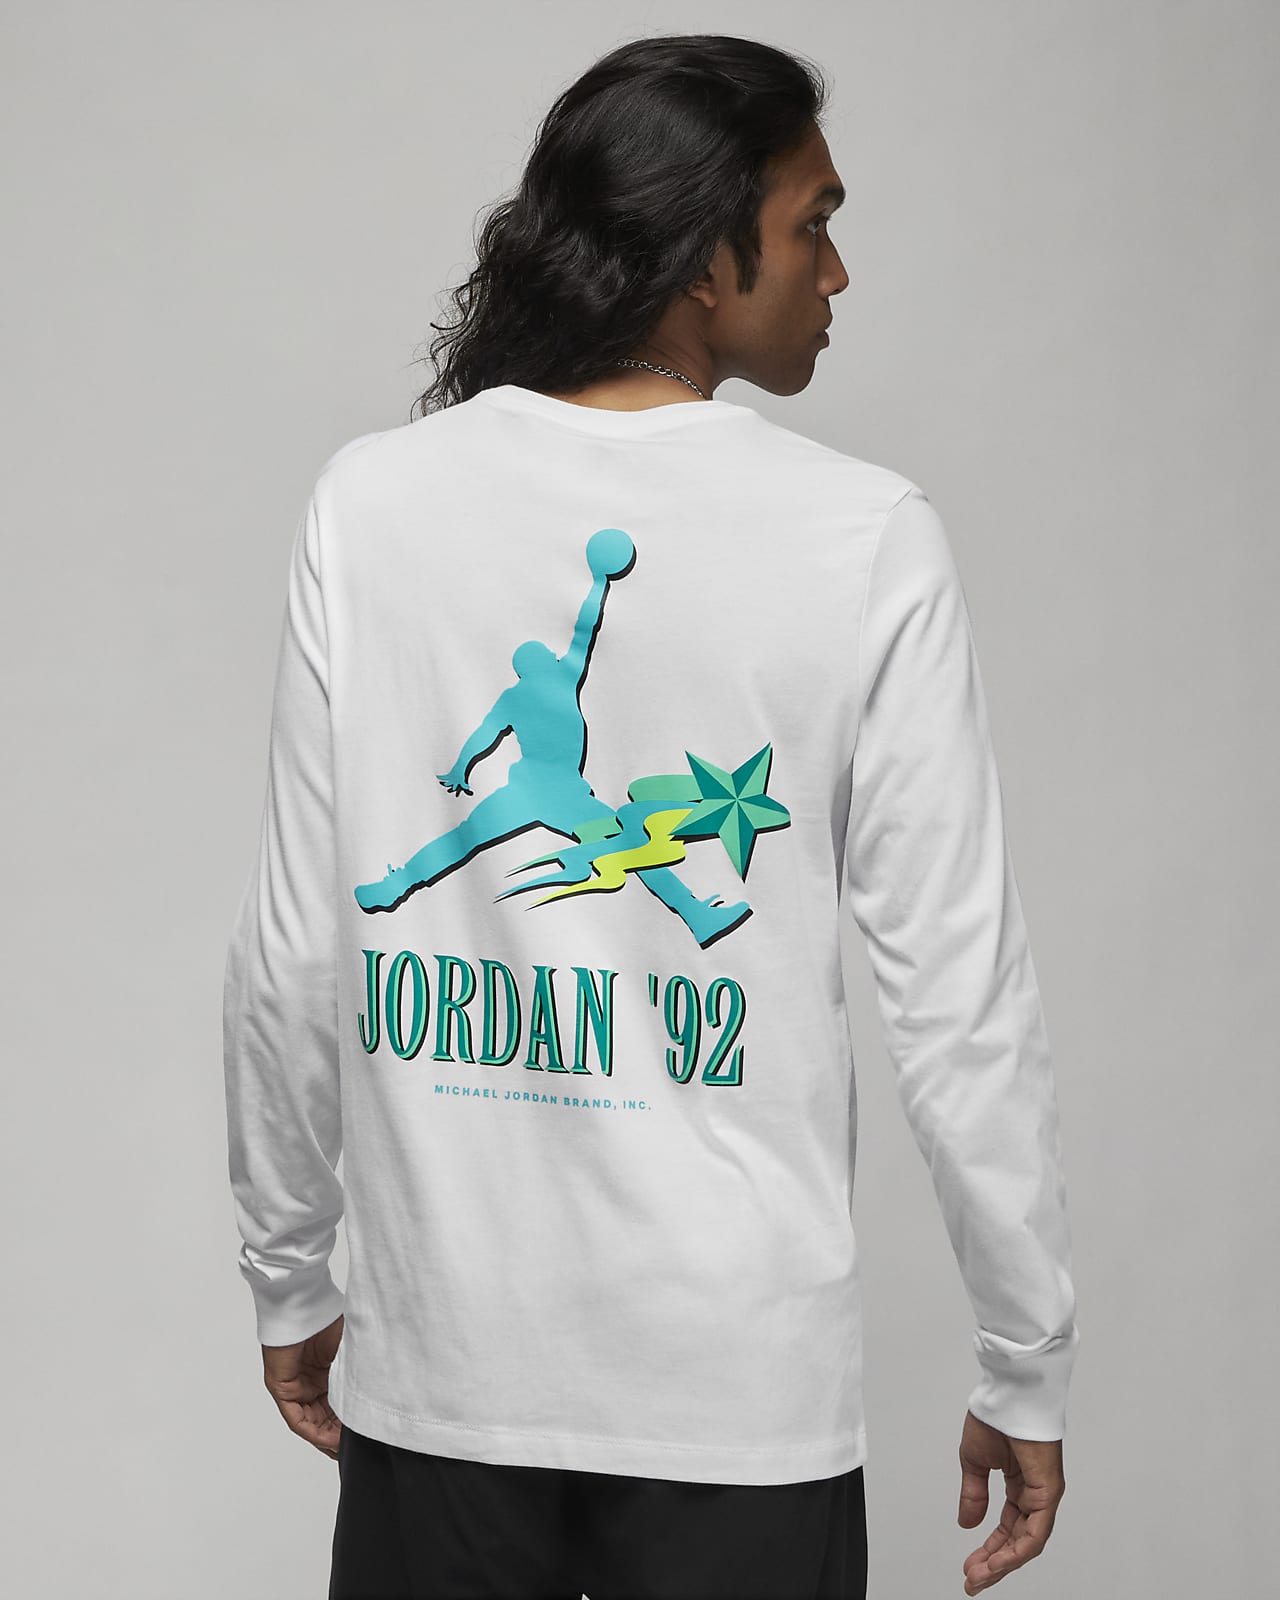 Jordan Brand Men's Long-Sleeve Nike.com